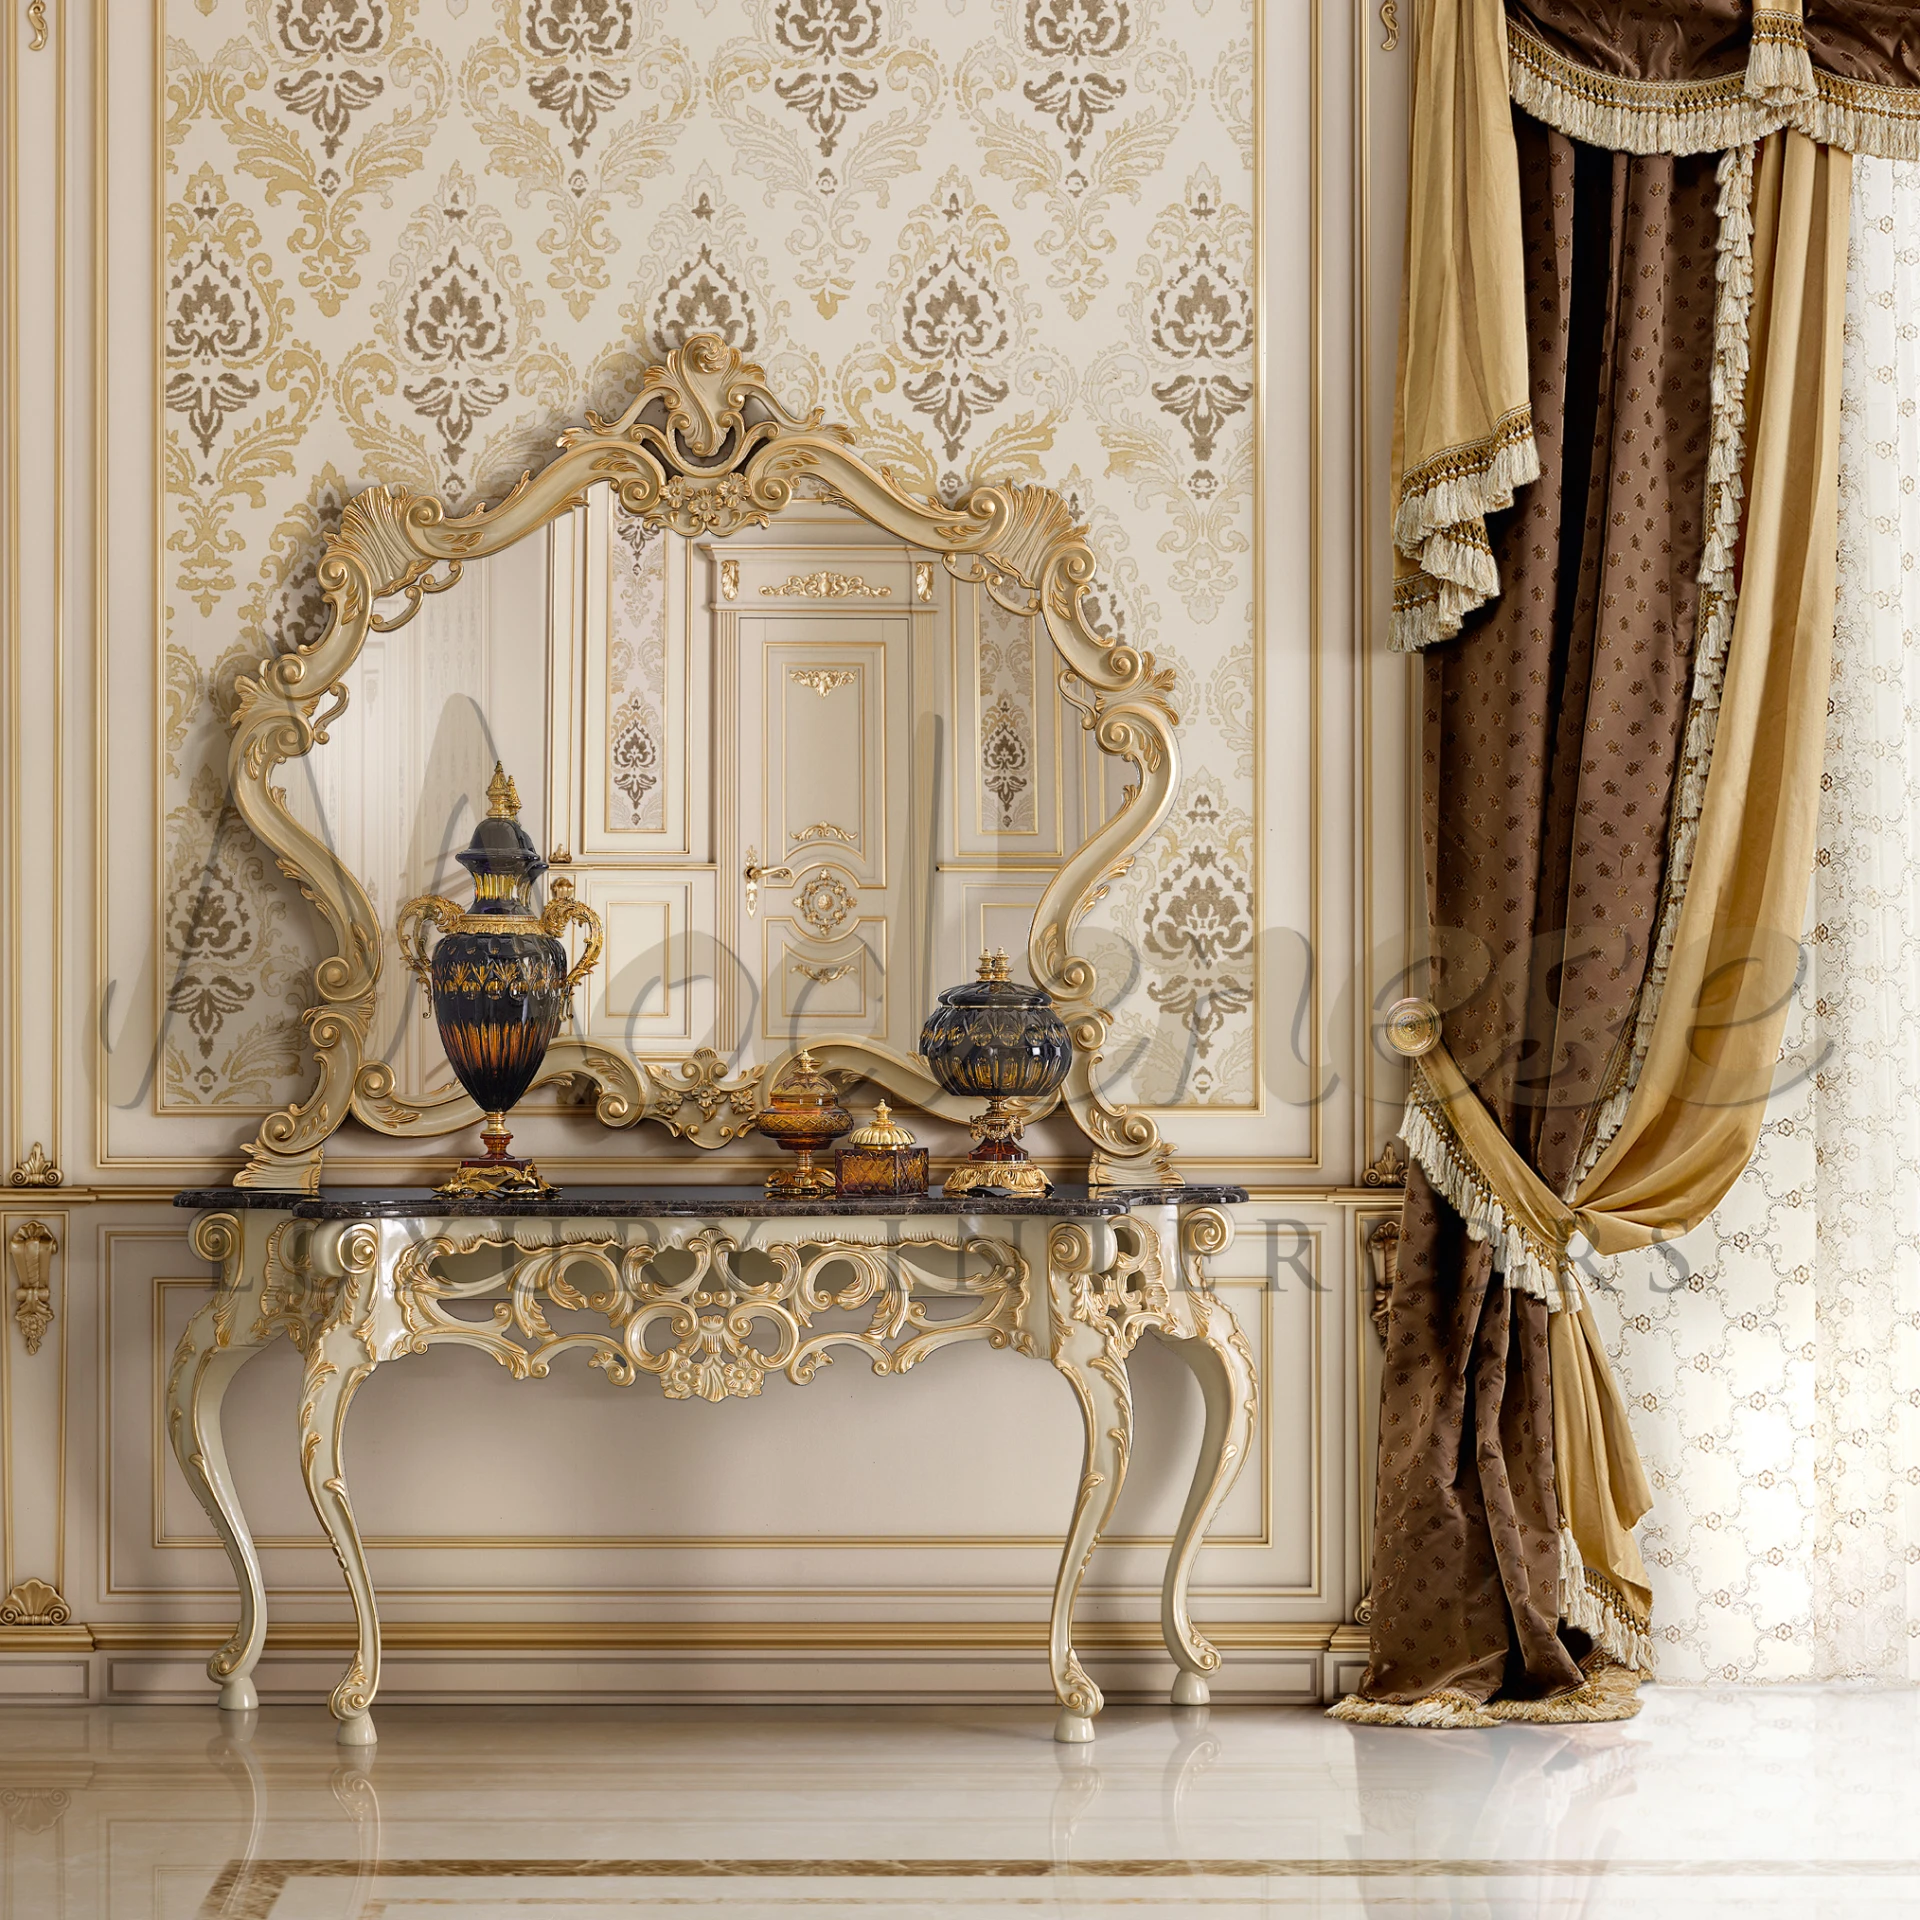 Handmade in Italy, the Florentine Figured Mirror features rich baroque style, making each piece a distinctive work of interior design.